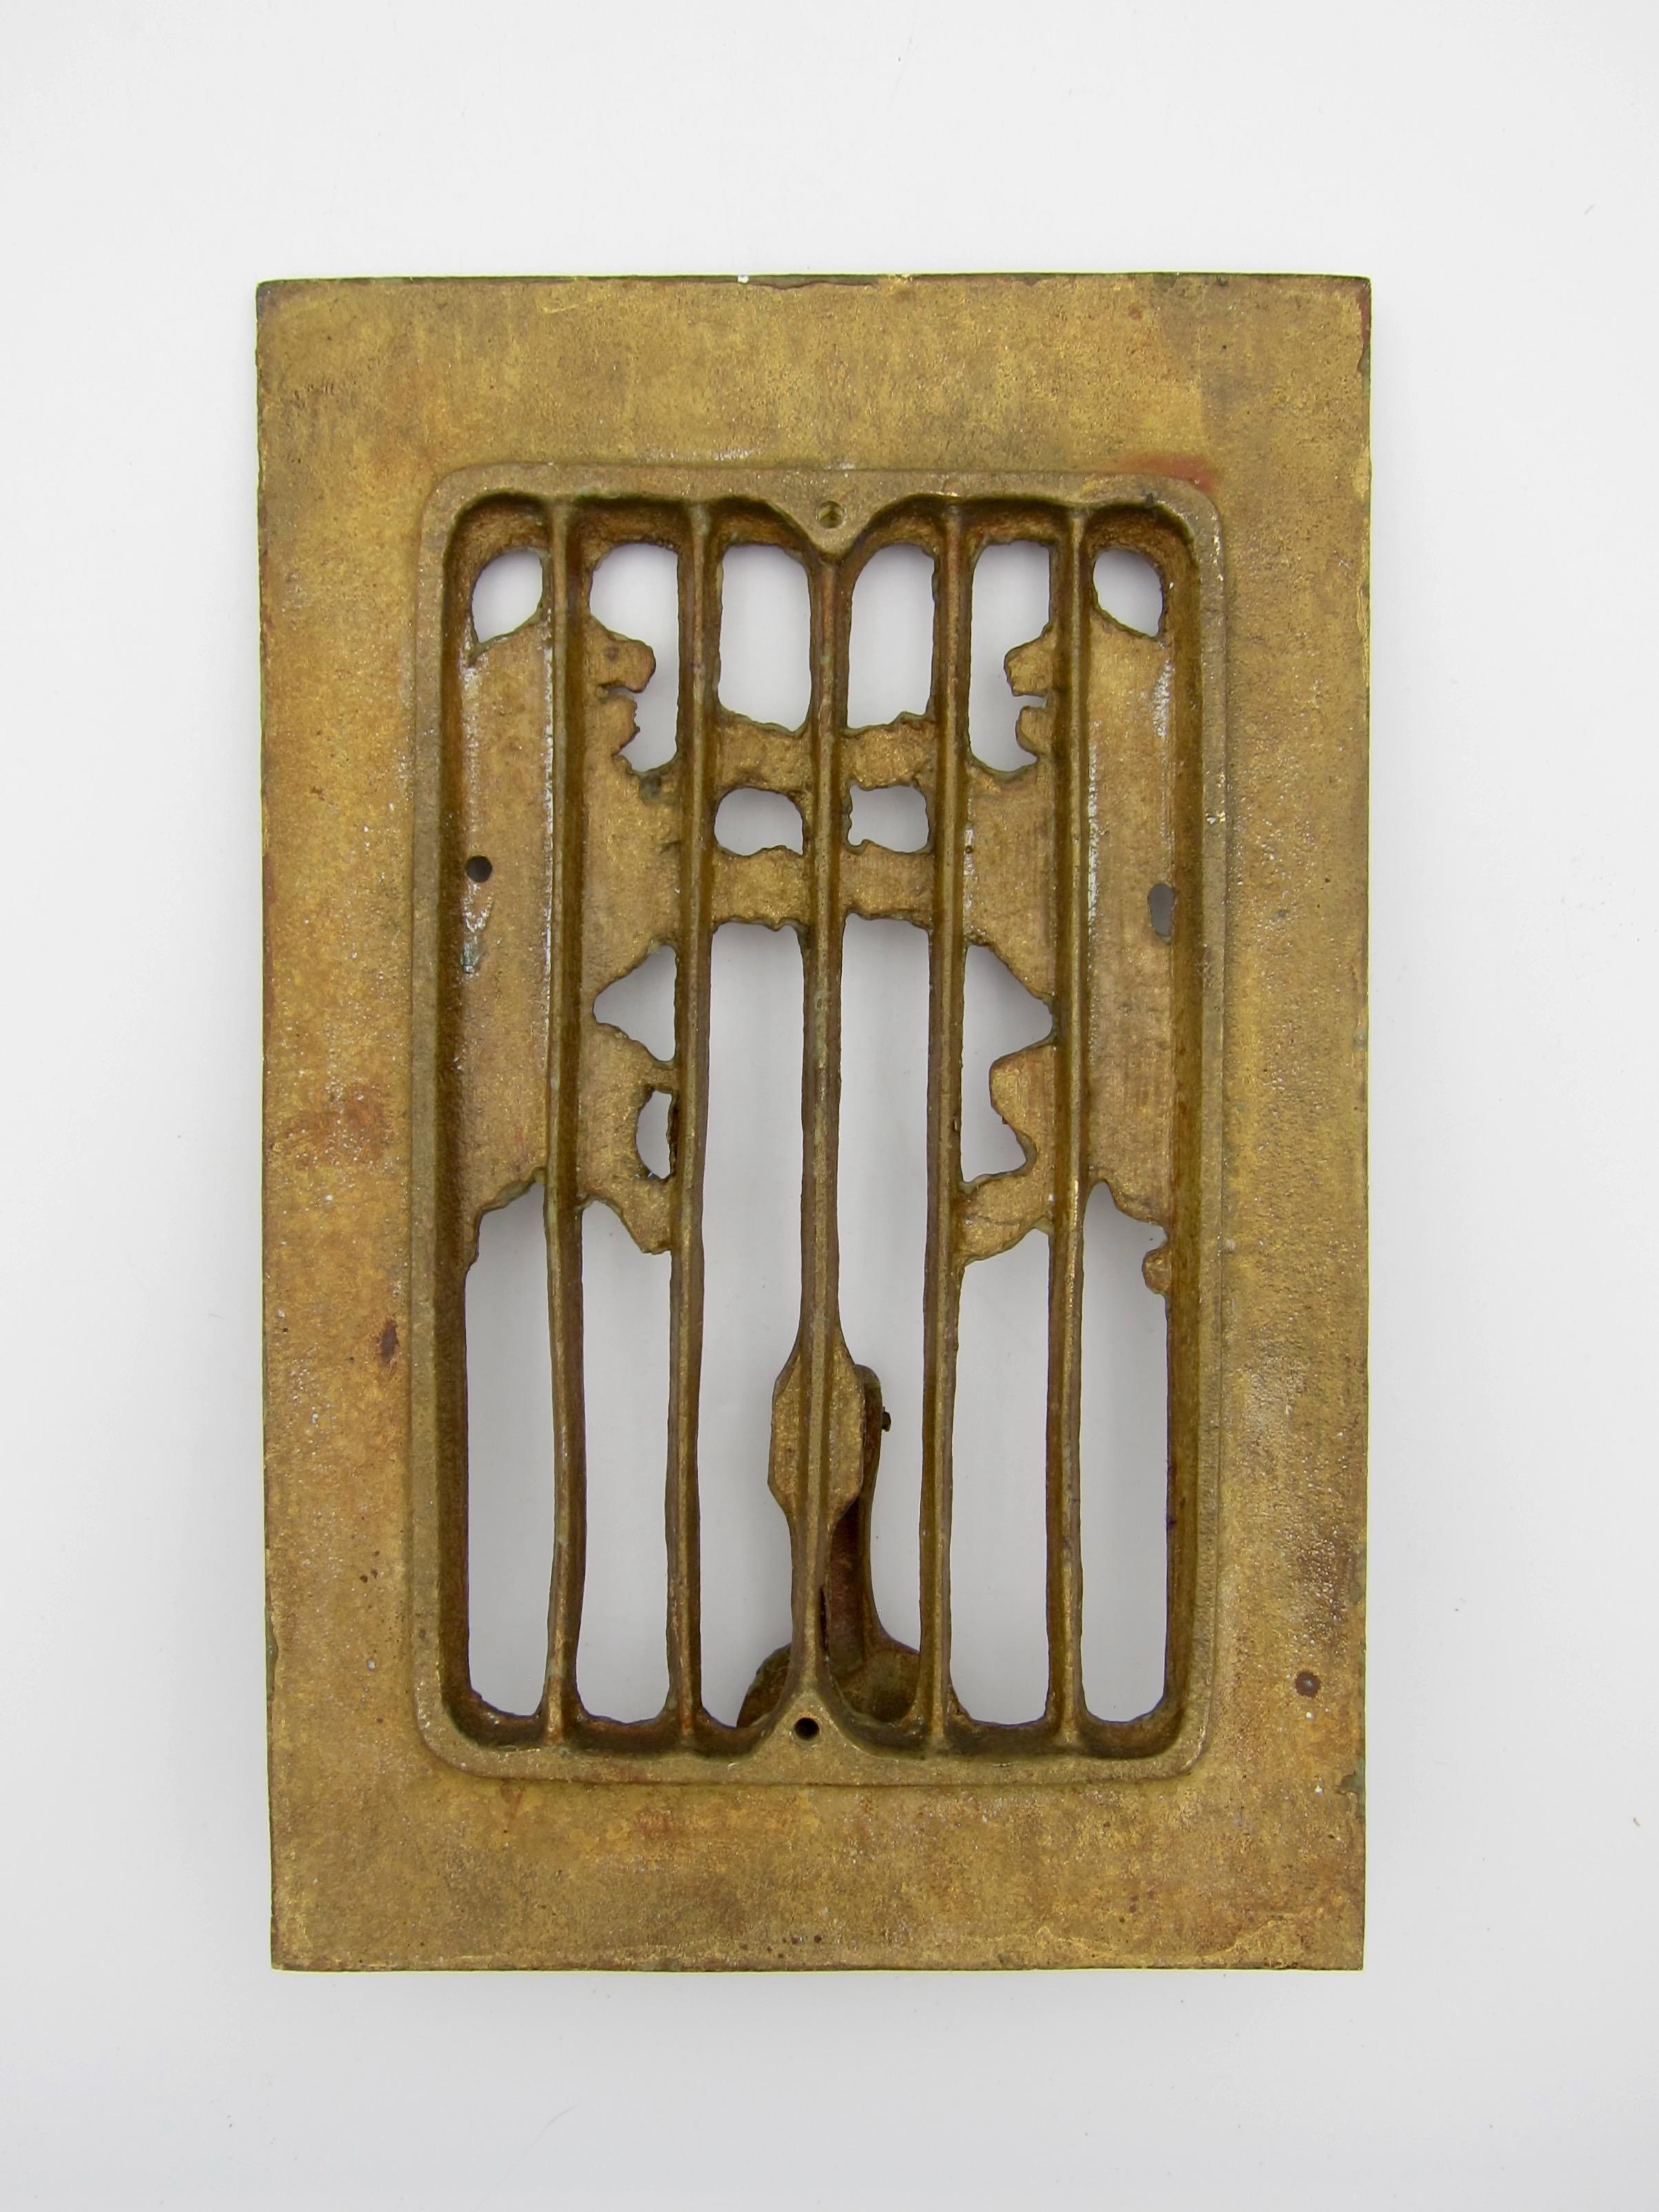 Cast Vintage Speakeasy Door Knocker and Peephole Grill in Two Panels